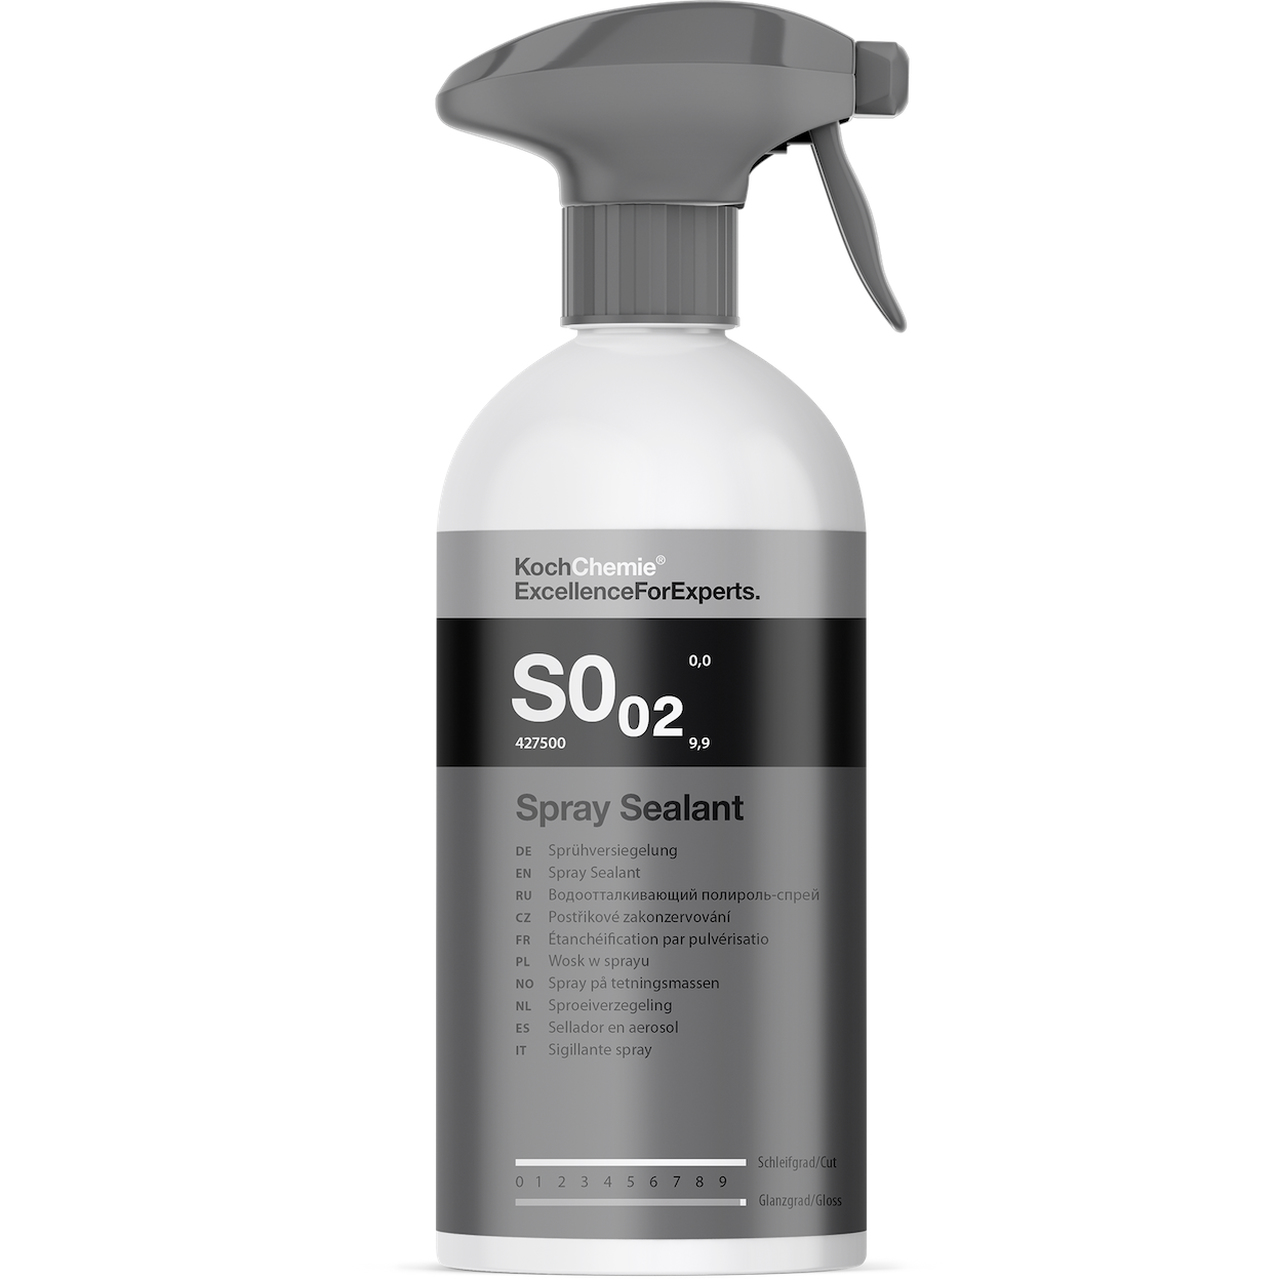 S0.02 - Spray Sealant - Selante sintético para proteção - 500ml